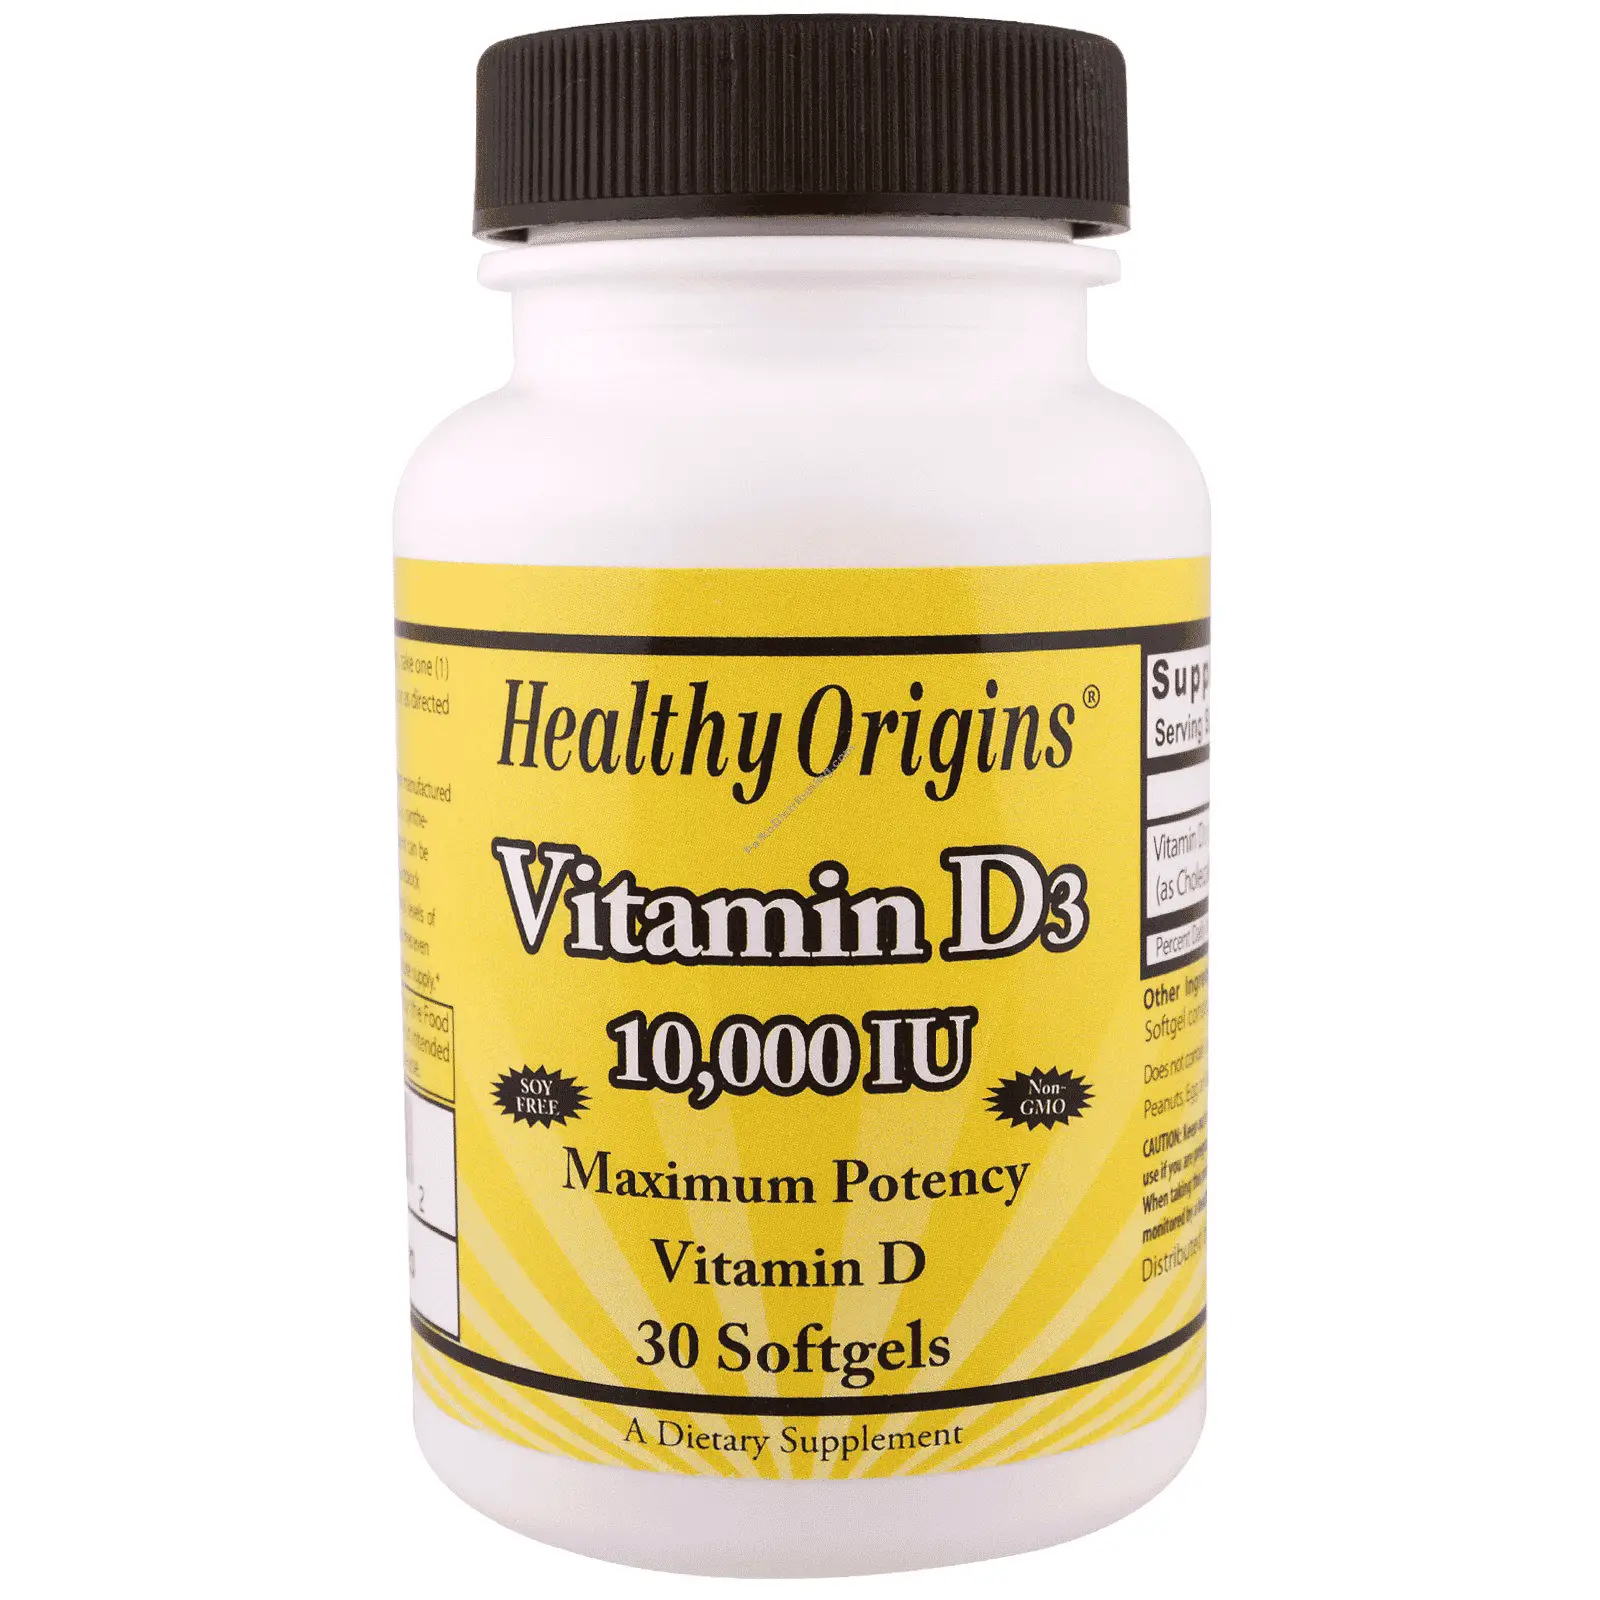 Vitamin D3 10,000 IU by Healthy Origins 481350 : Items